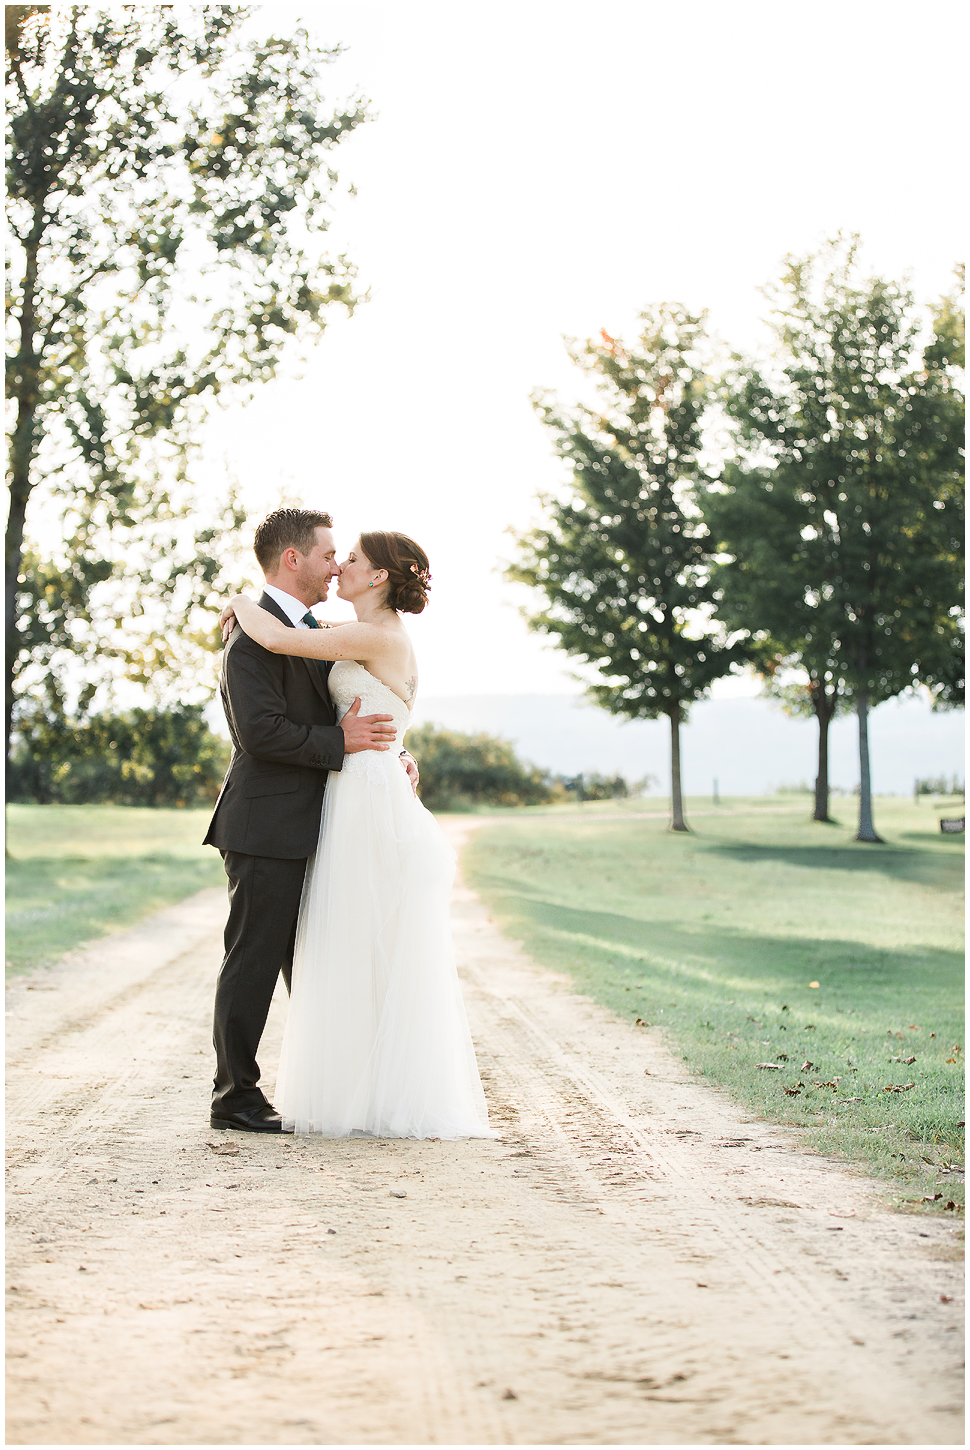 Bride and Groom hug and kiss on a dirt path on their wedding day. 